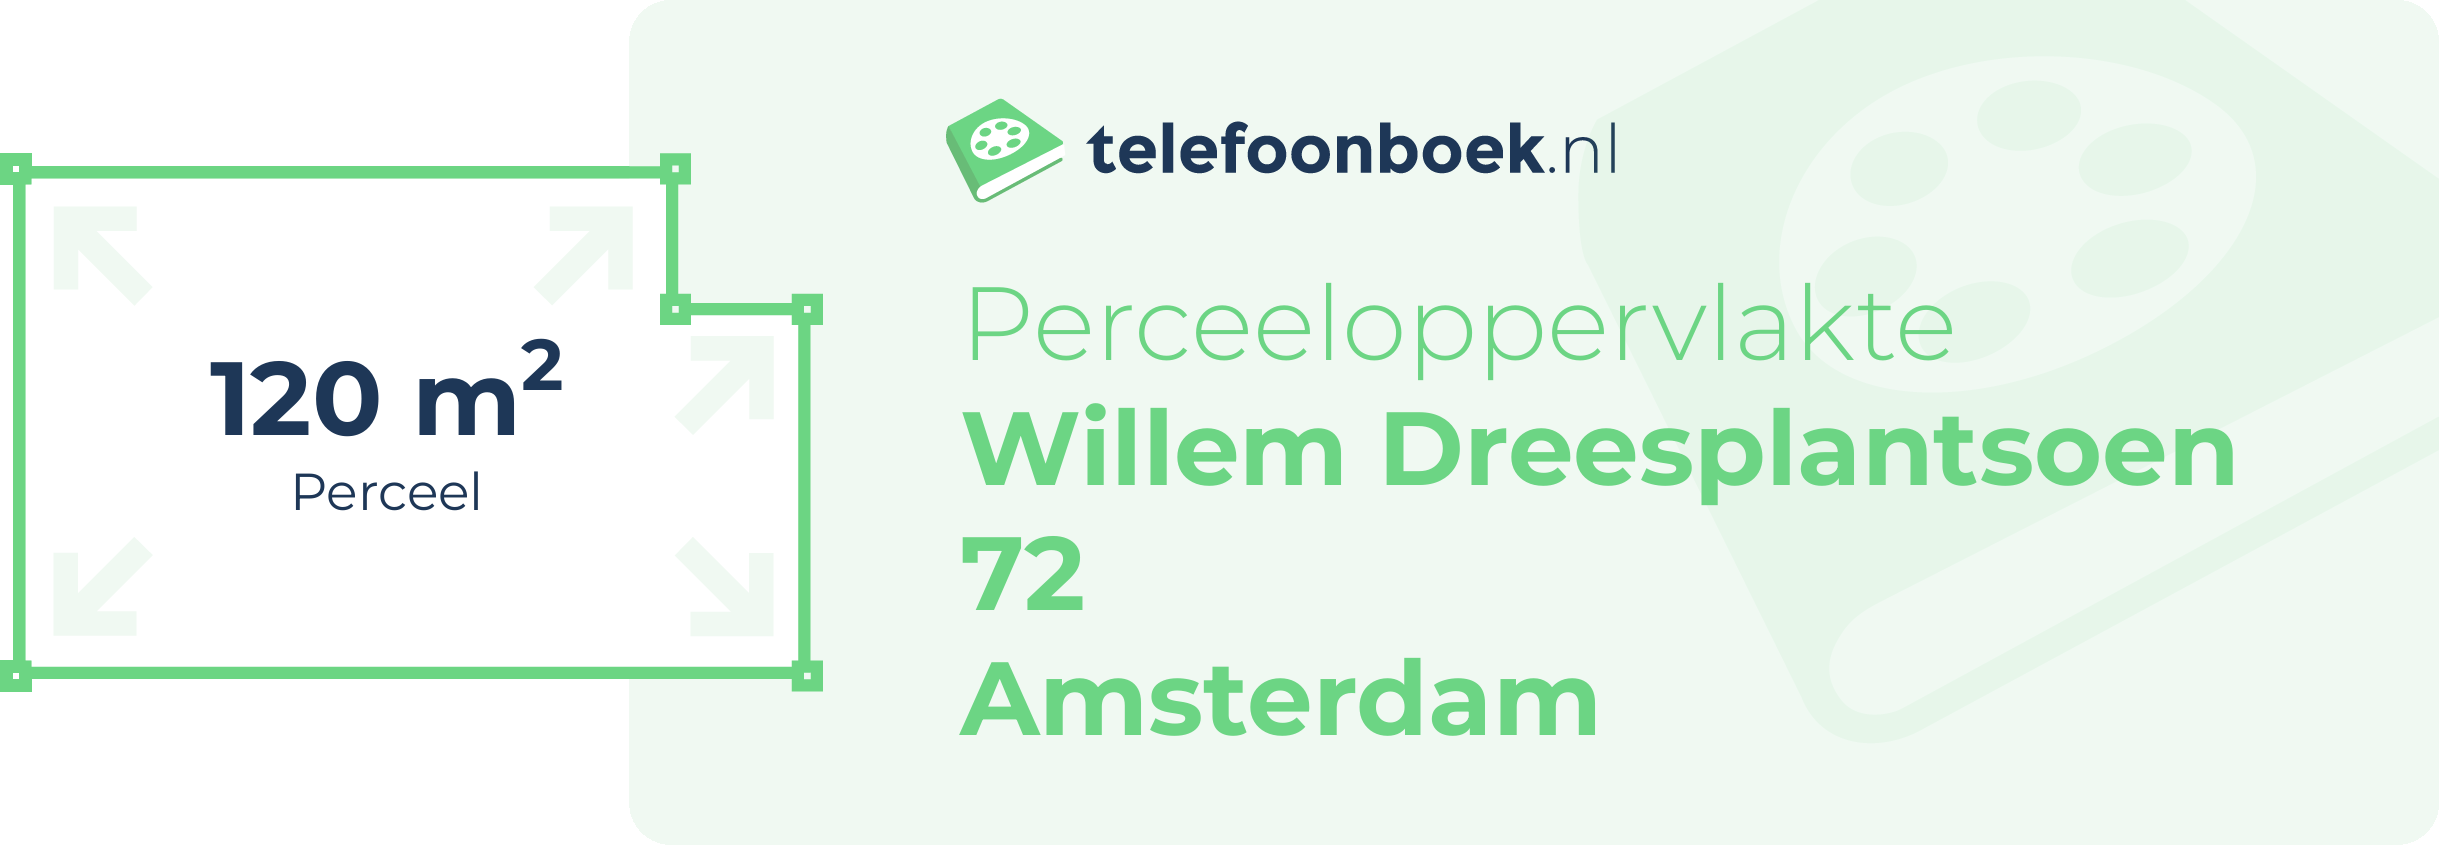 Perceeloppervlakte Willem Dreesplantsoen 72 Amsterdam